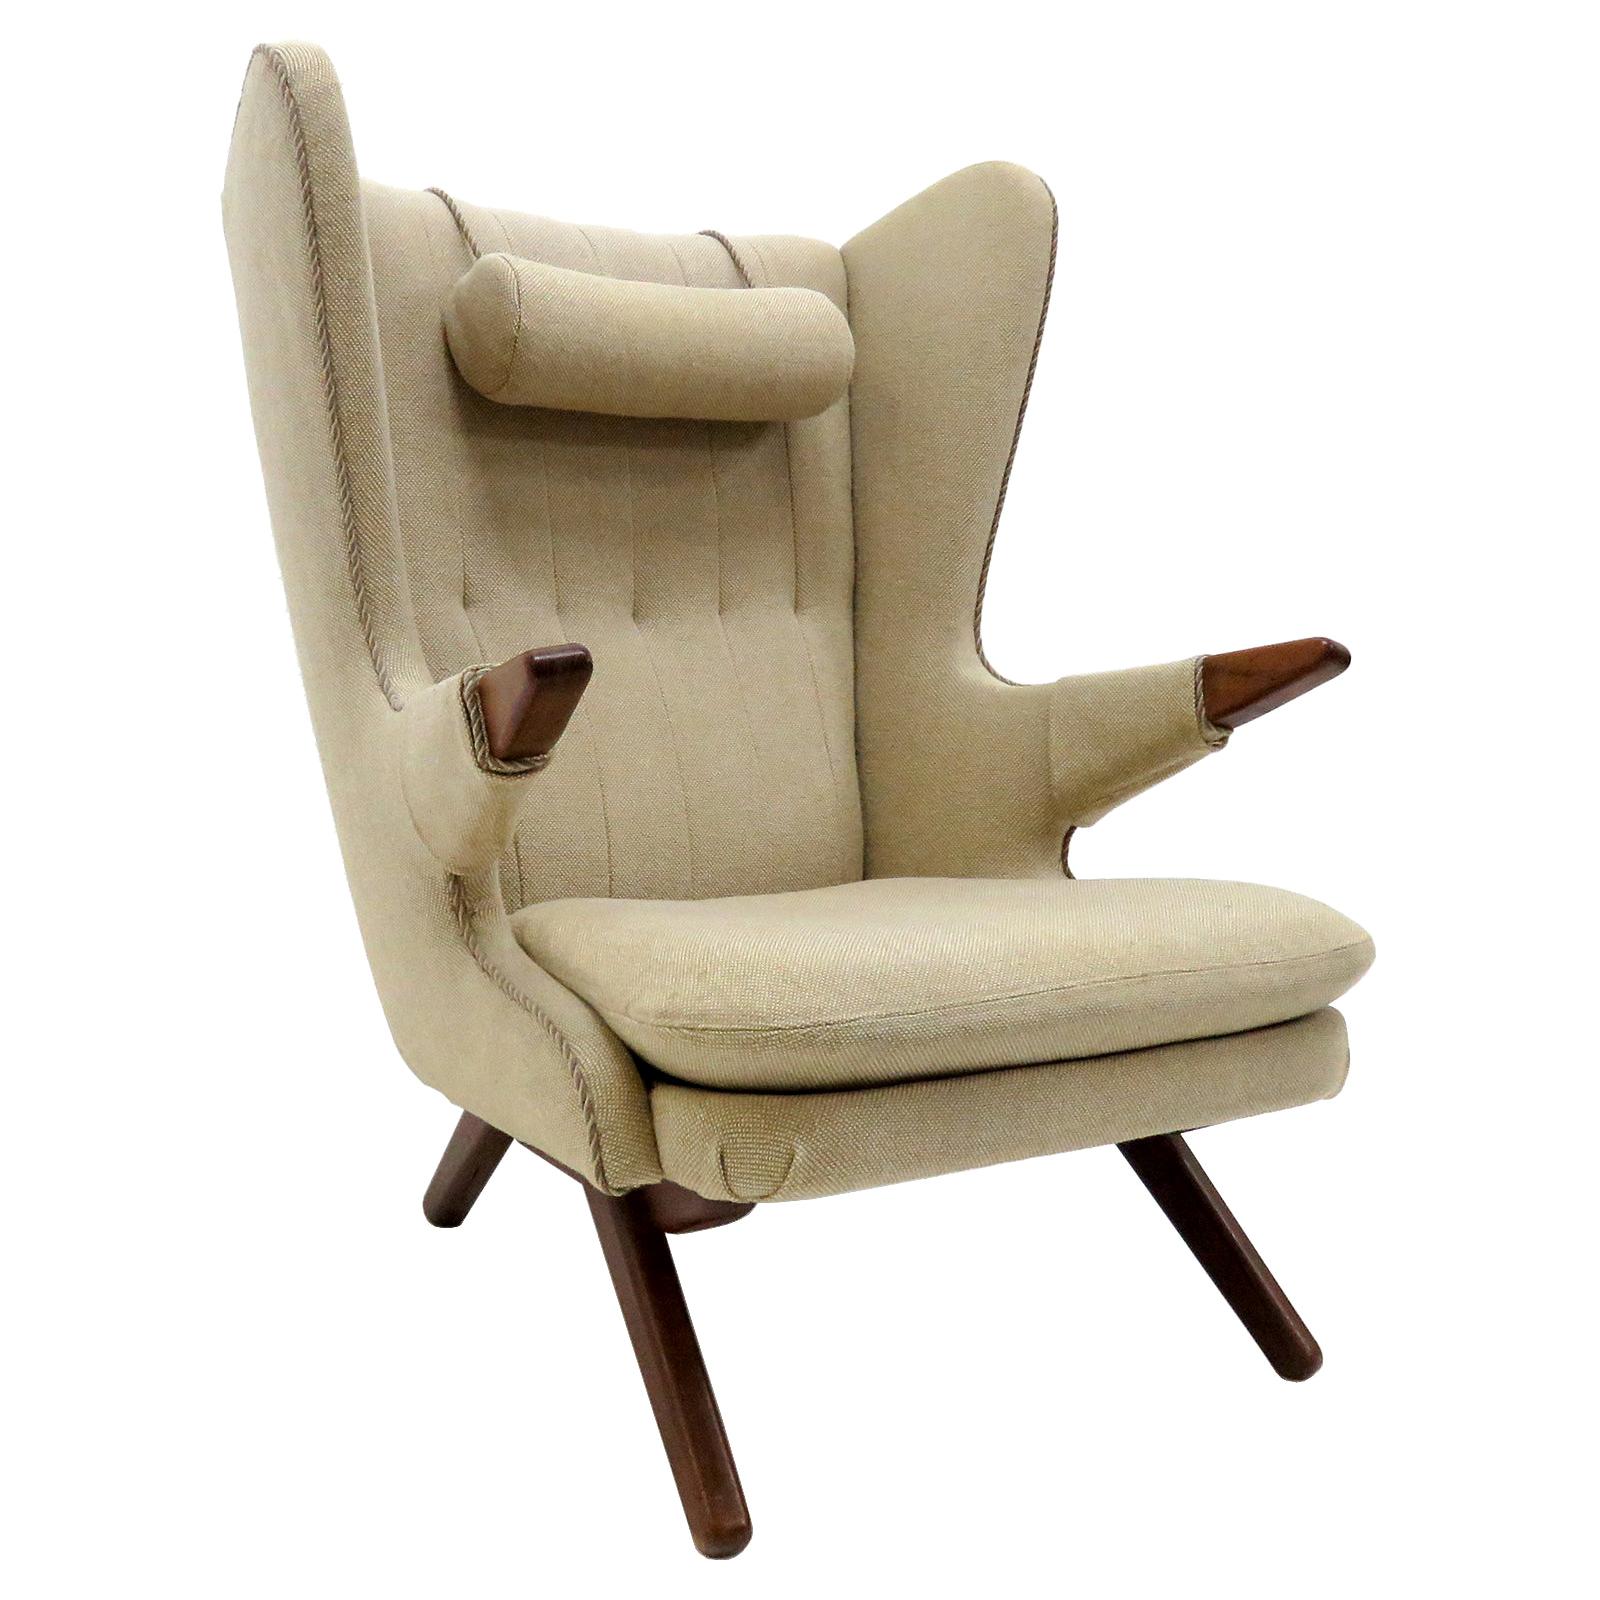 Svend Skipper 'Model 91' Wingback Lounge Chair, 1950